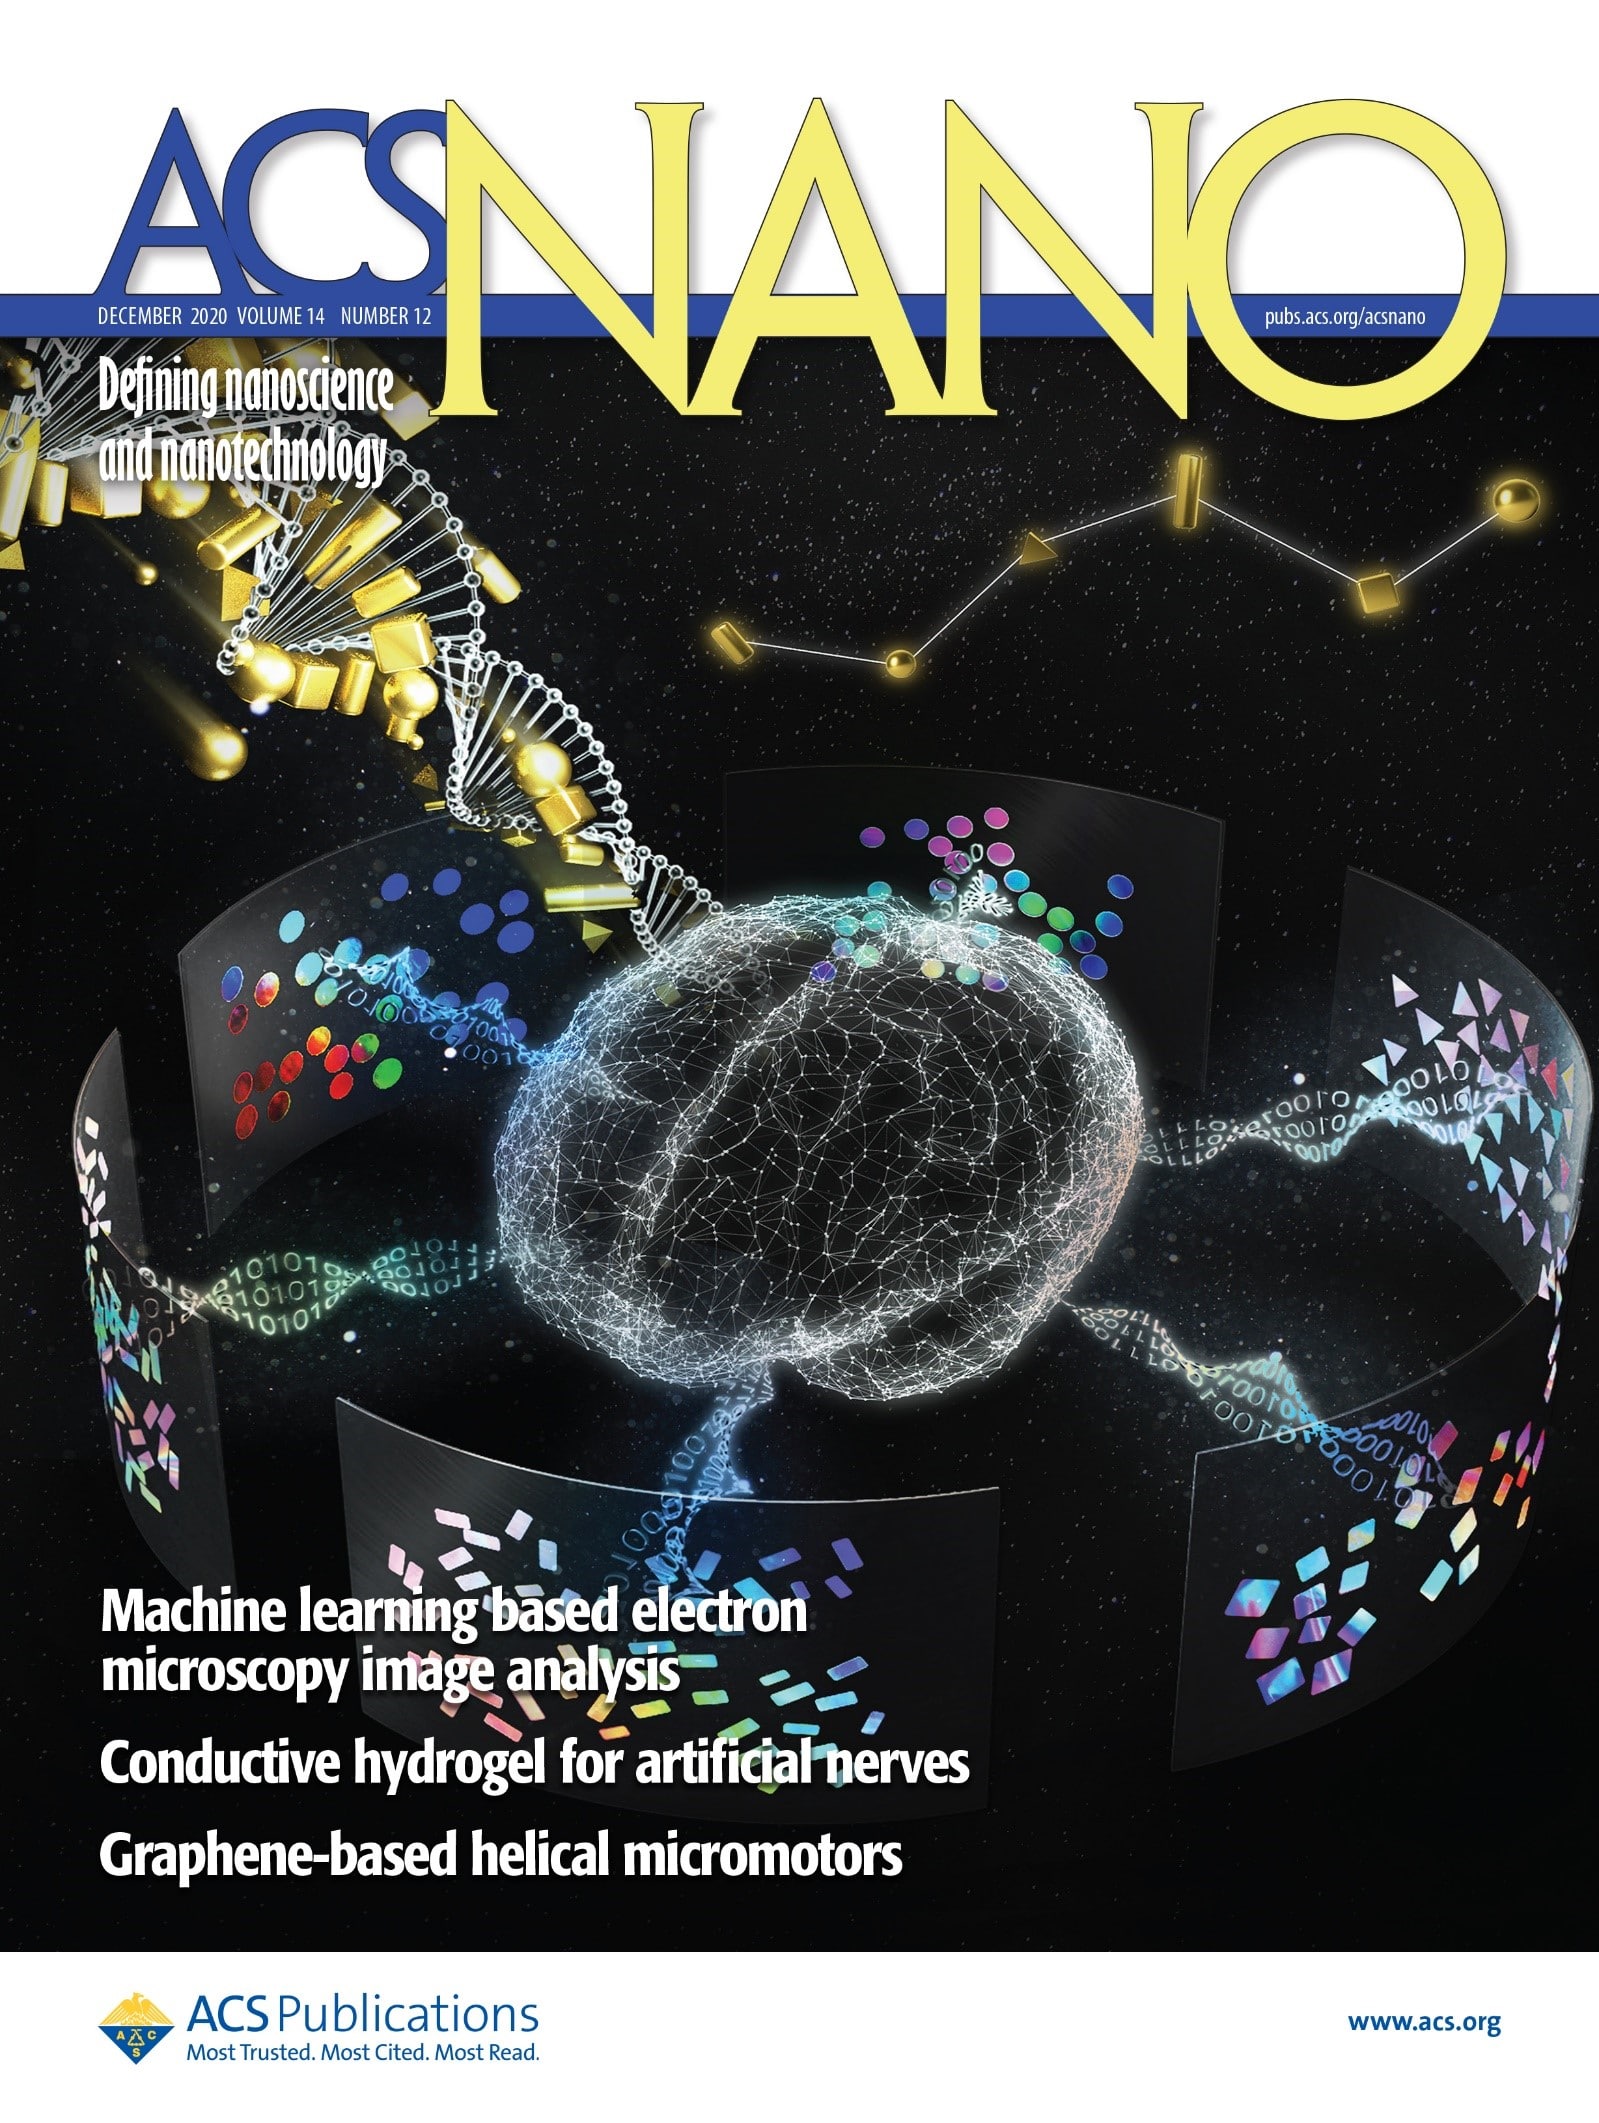 Acs NANO Journal, defning Nanoscience and Nanotechnology